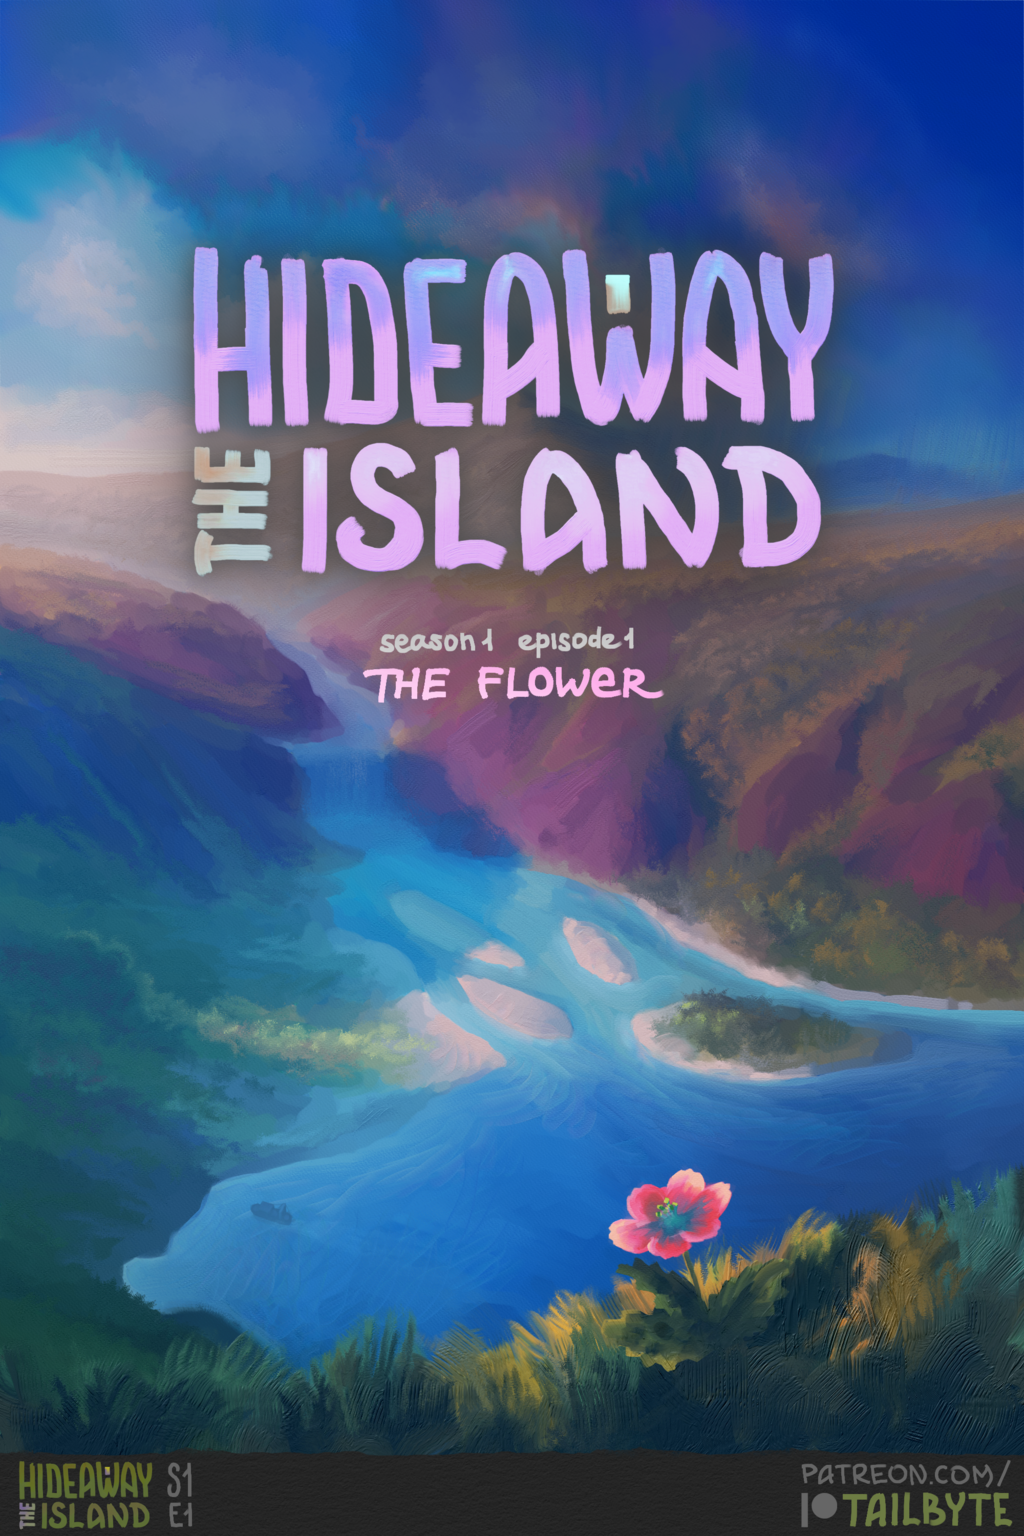 The Hideaway Island S1E1 Cover